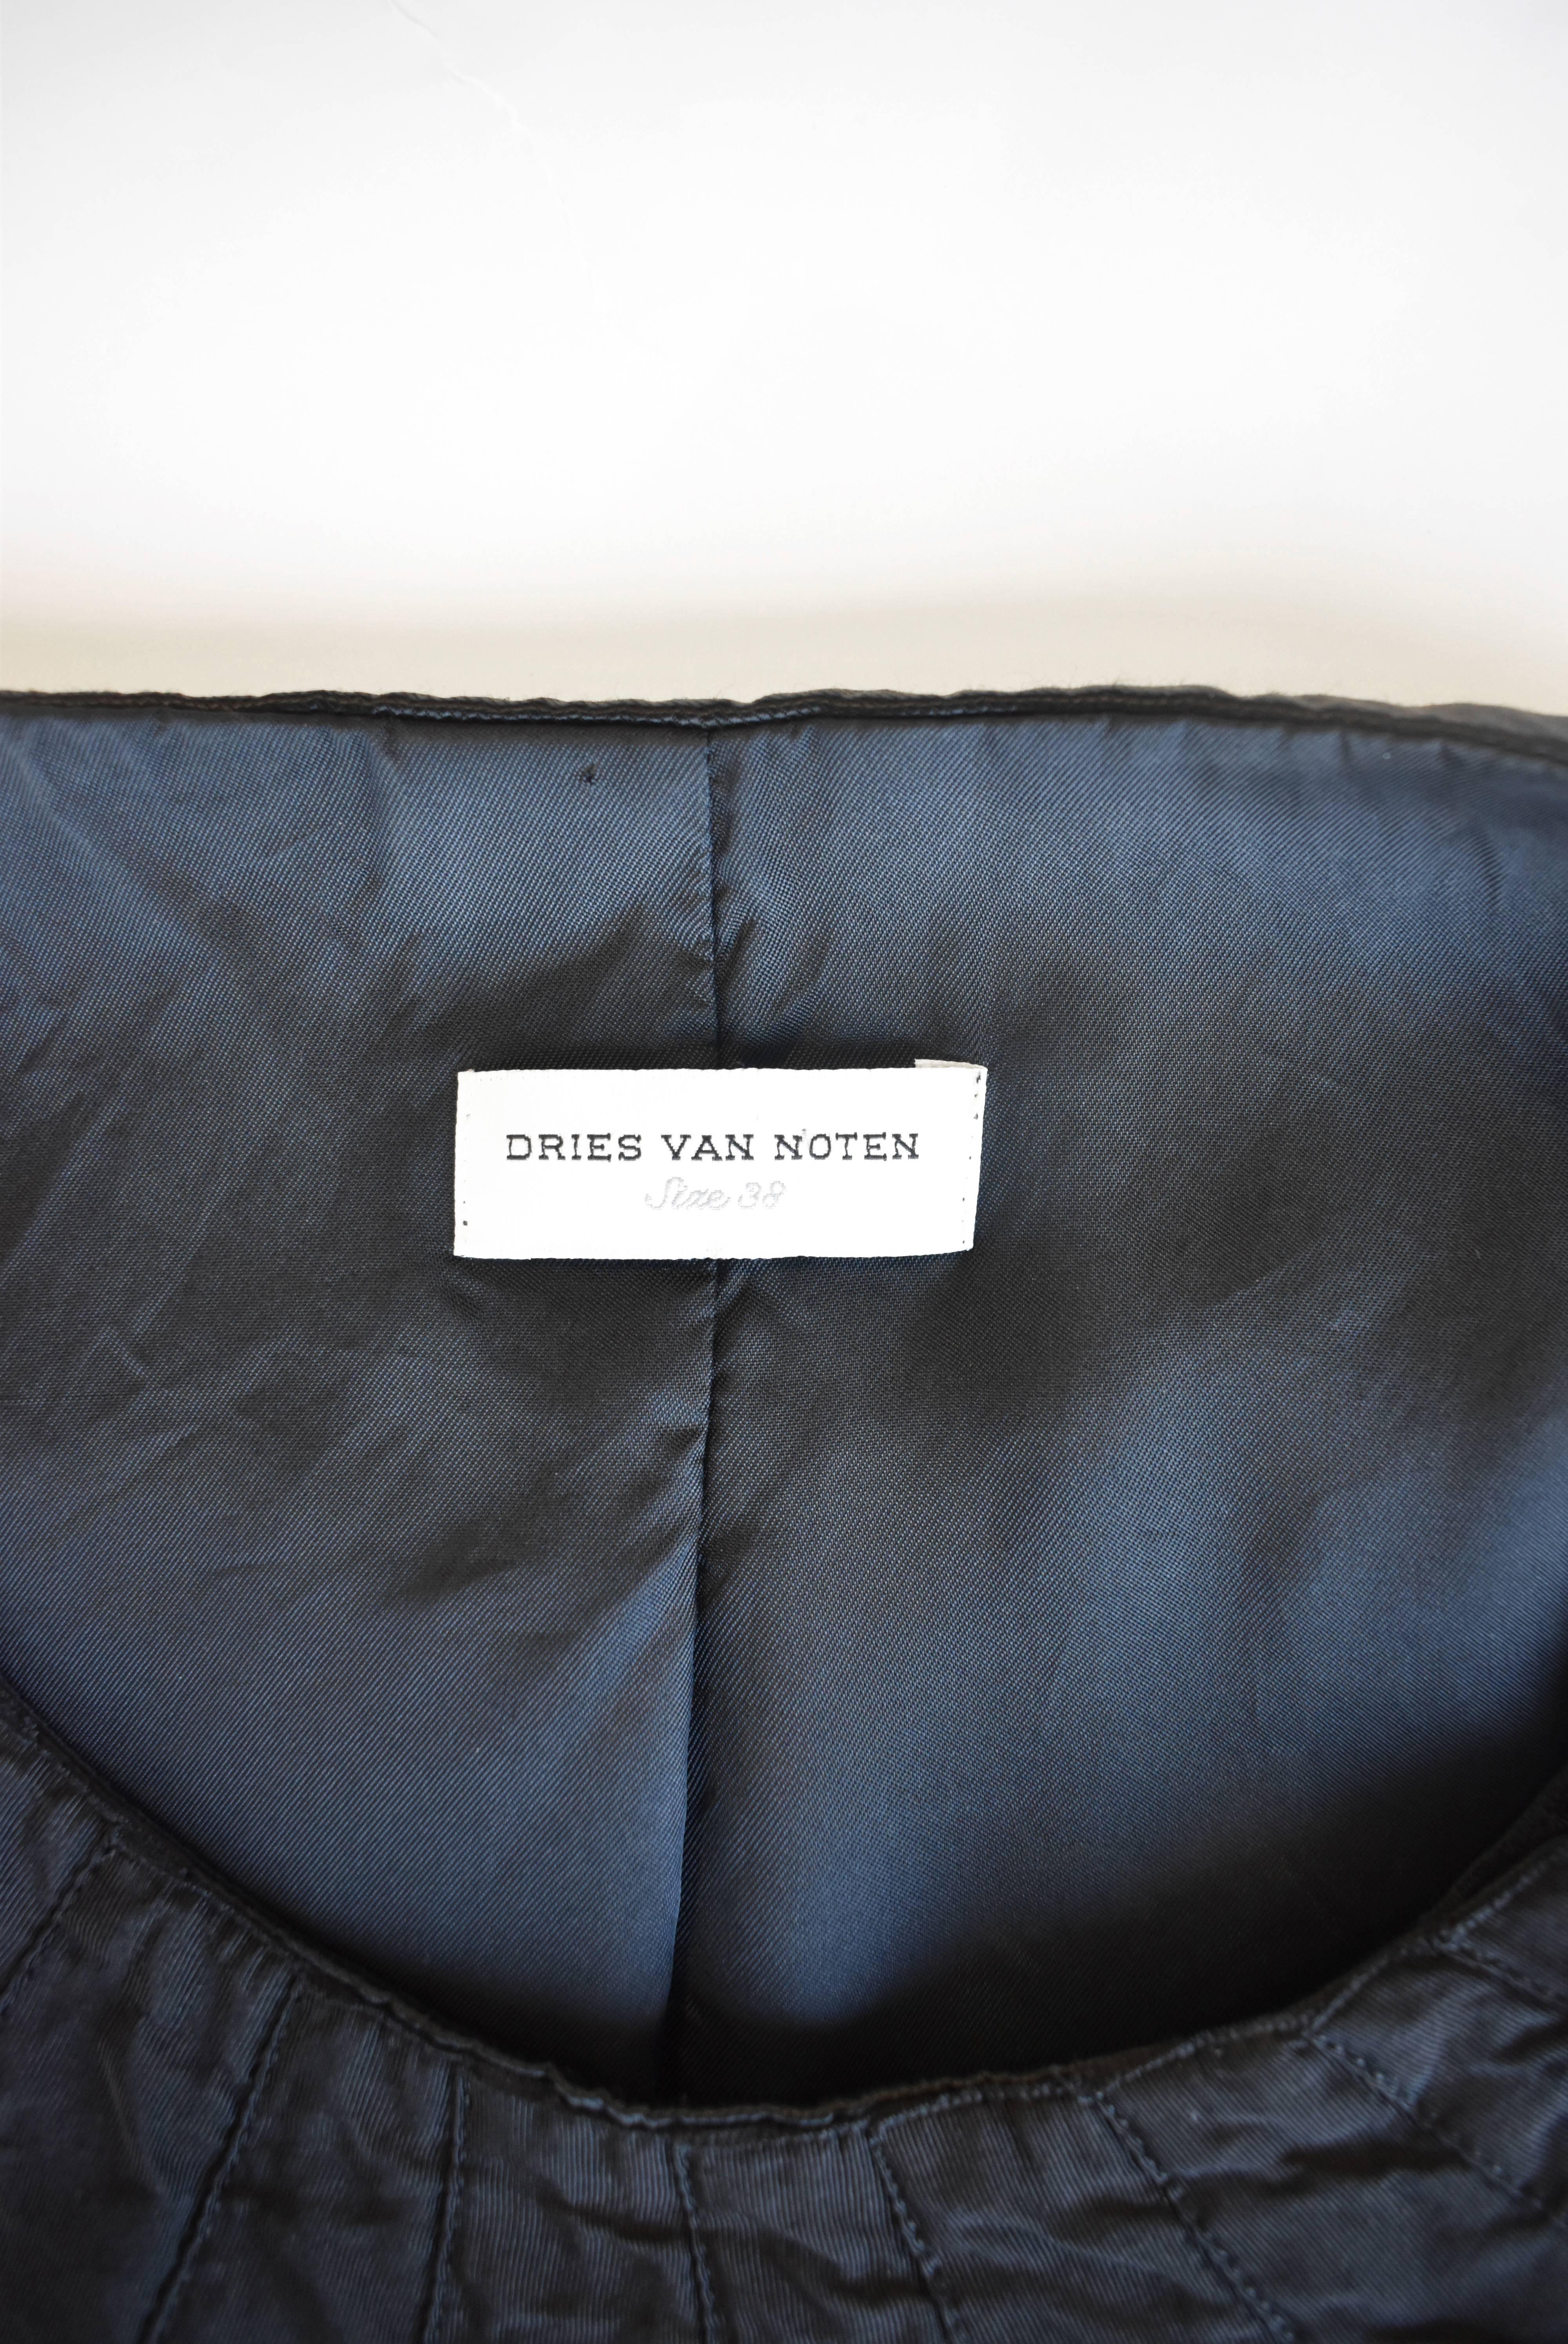 Dries van Noten black button down dress For Sale 3